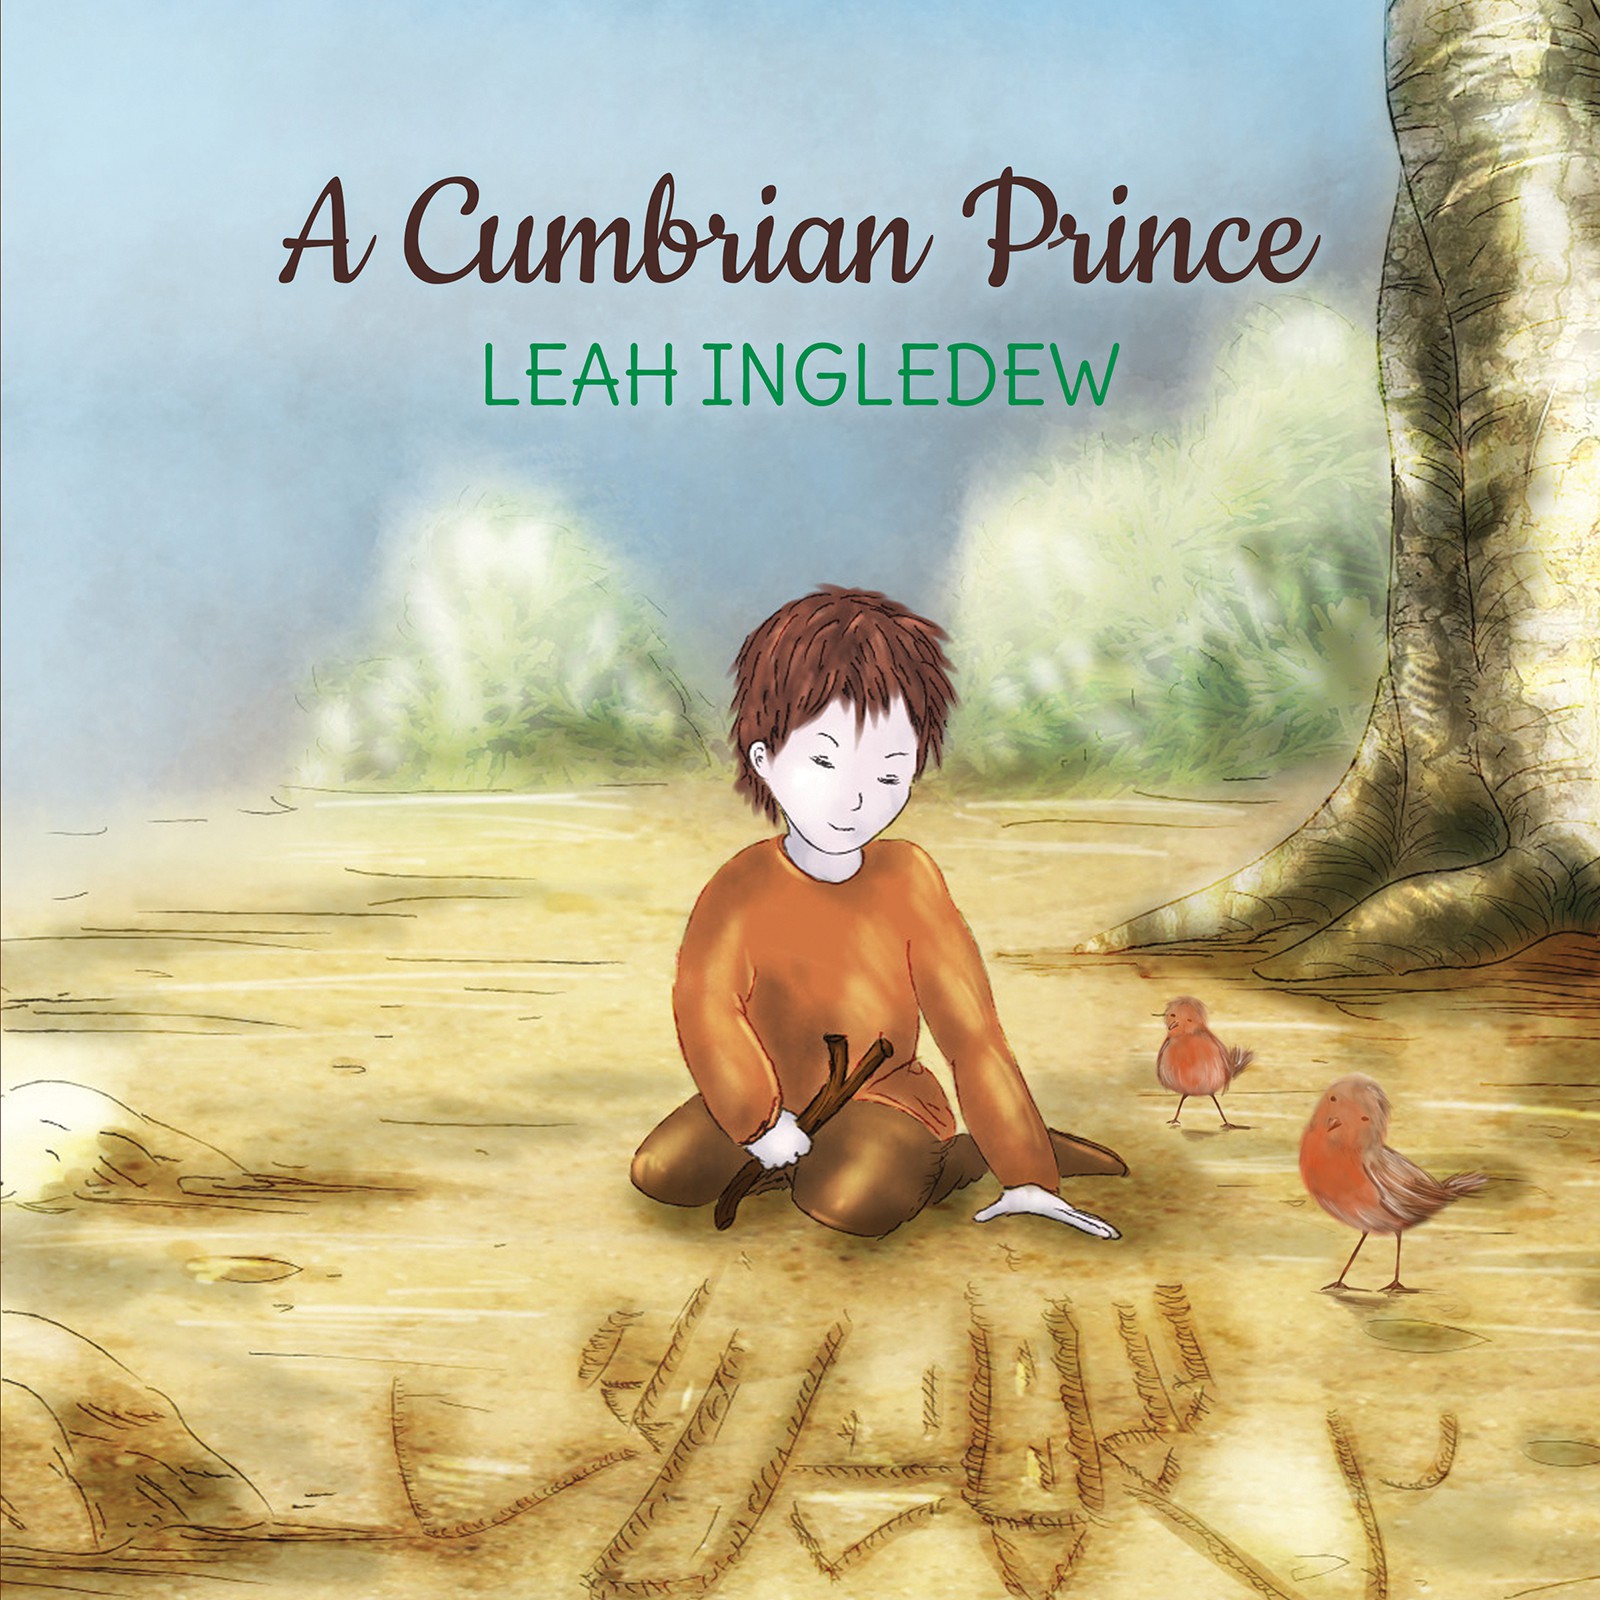 Leah Ingledew’s new Children’s book, ‘A Cumbrian Prince’ featured in Berwick Advertiser